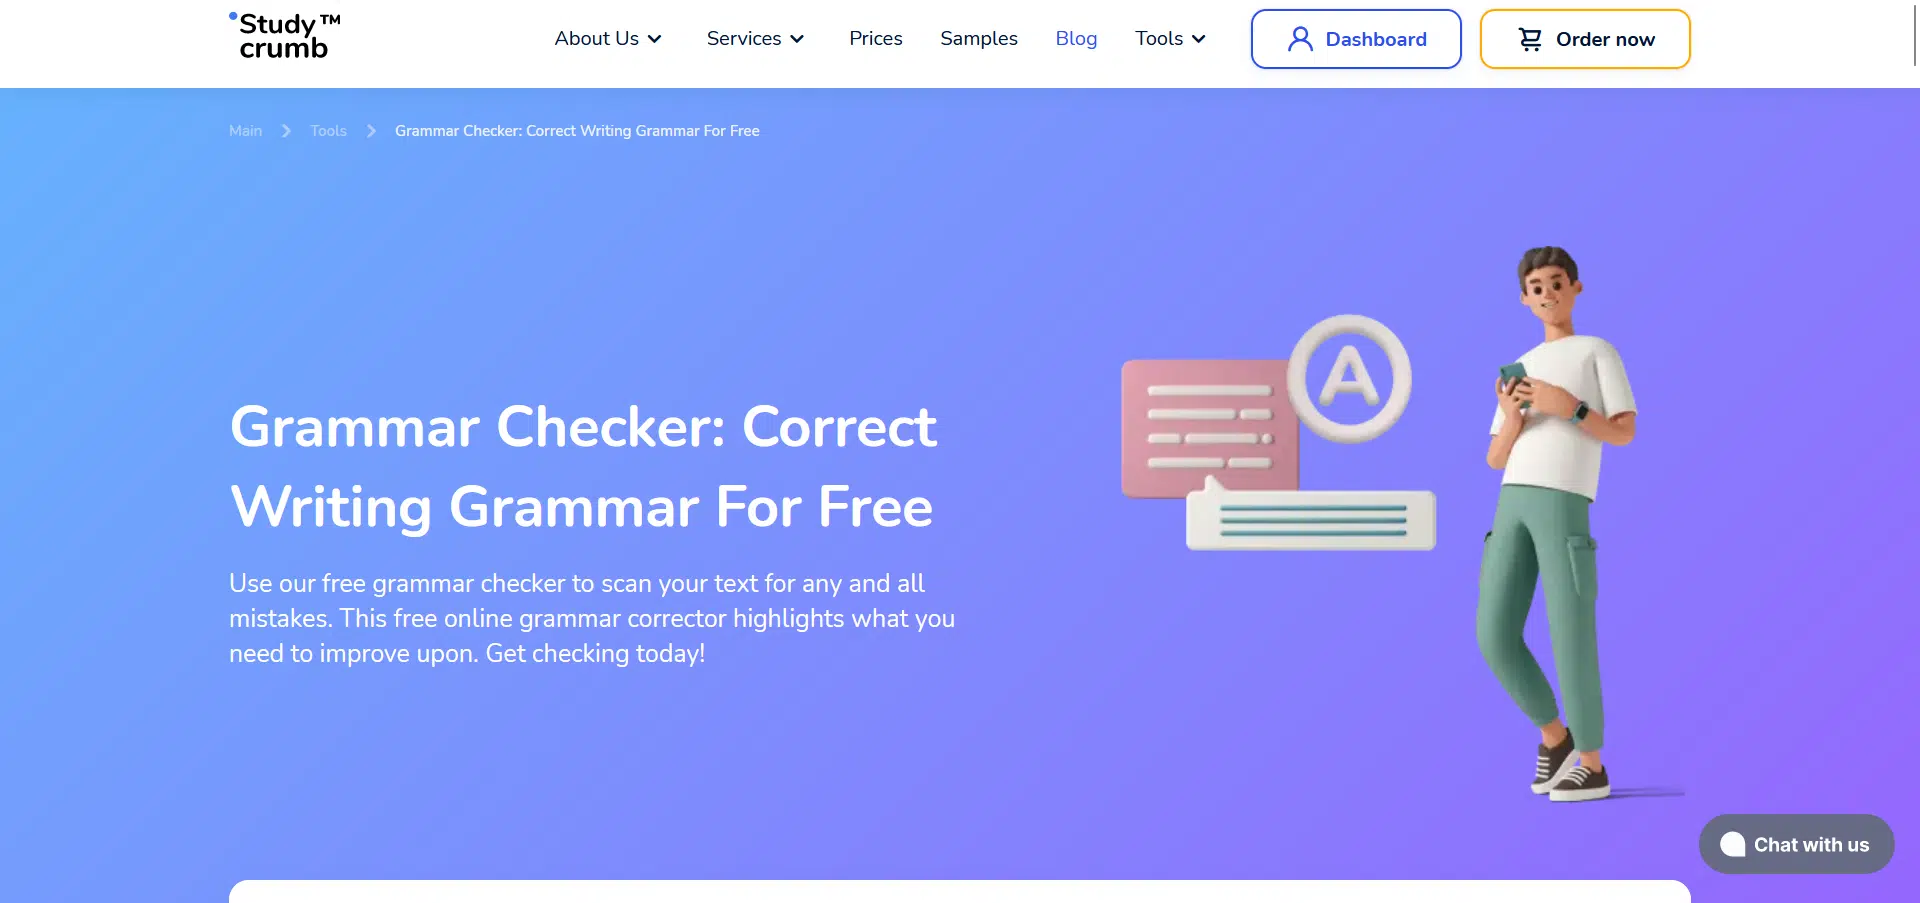 grammar-checker-insights-reviews-guide